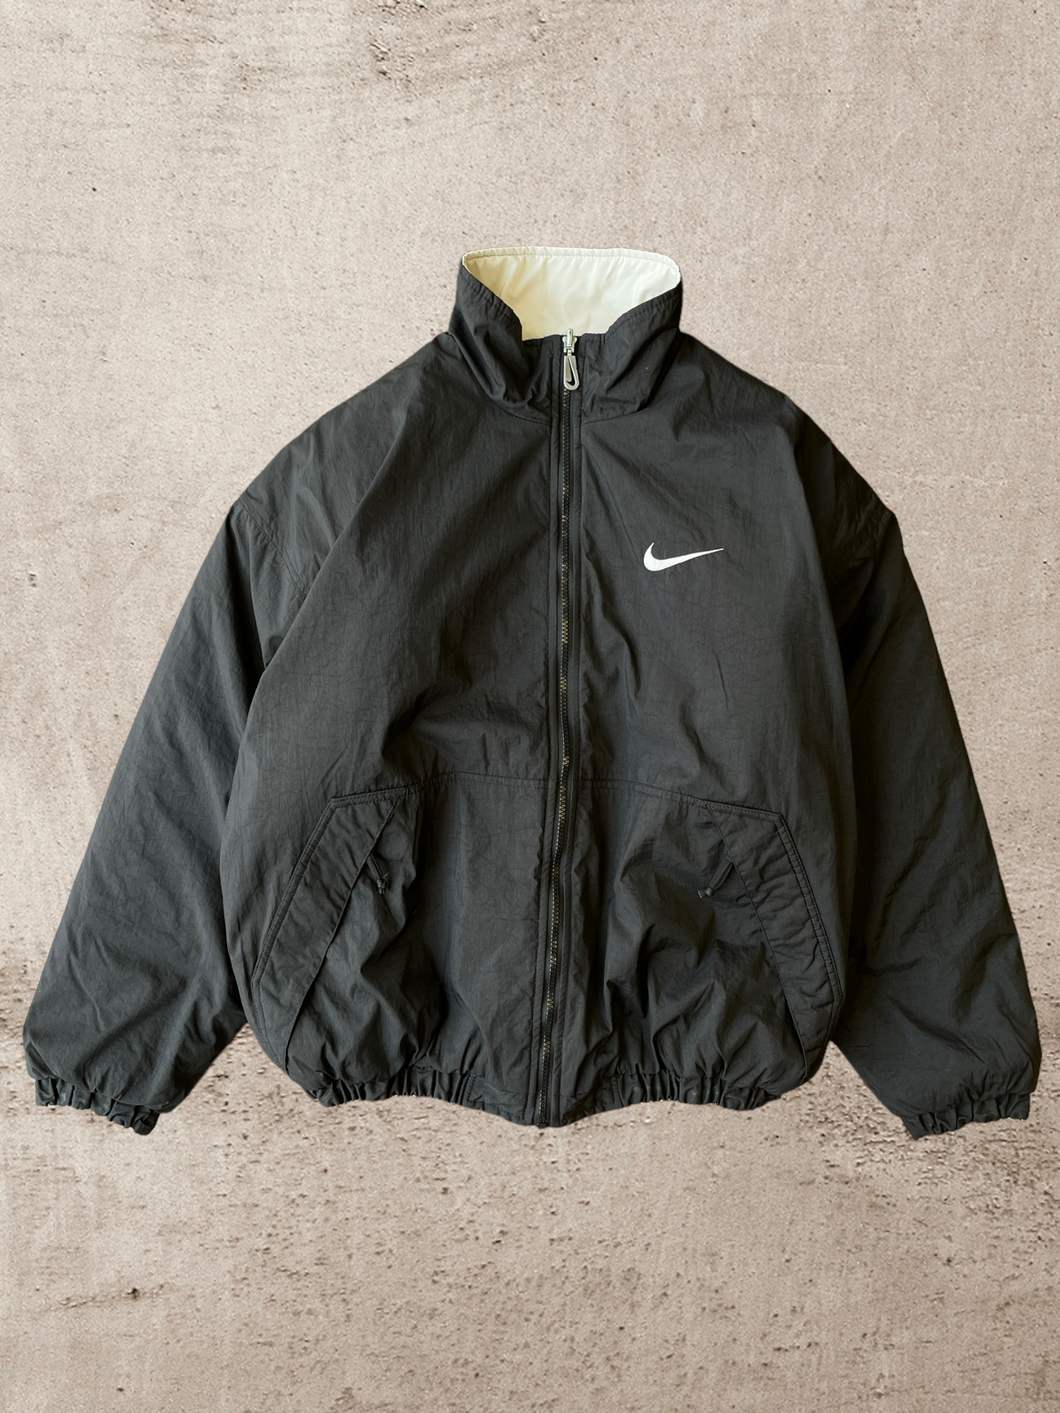 90s Nike Reversible Puffer Jacket - Large/X-Large